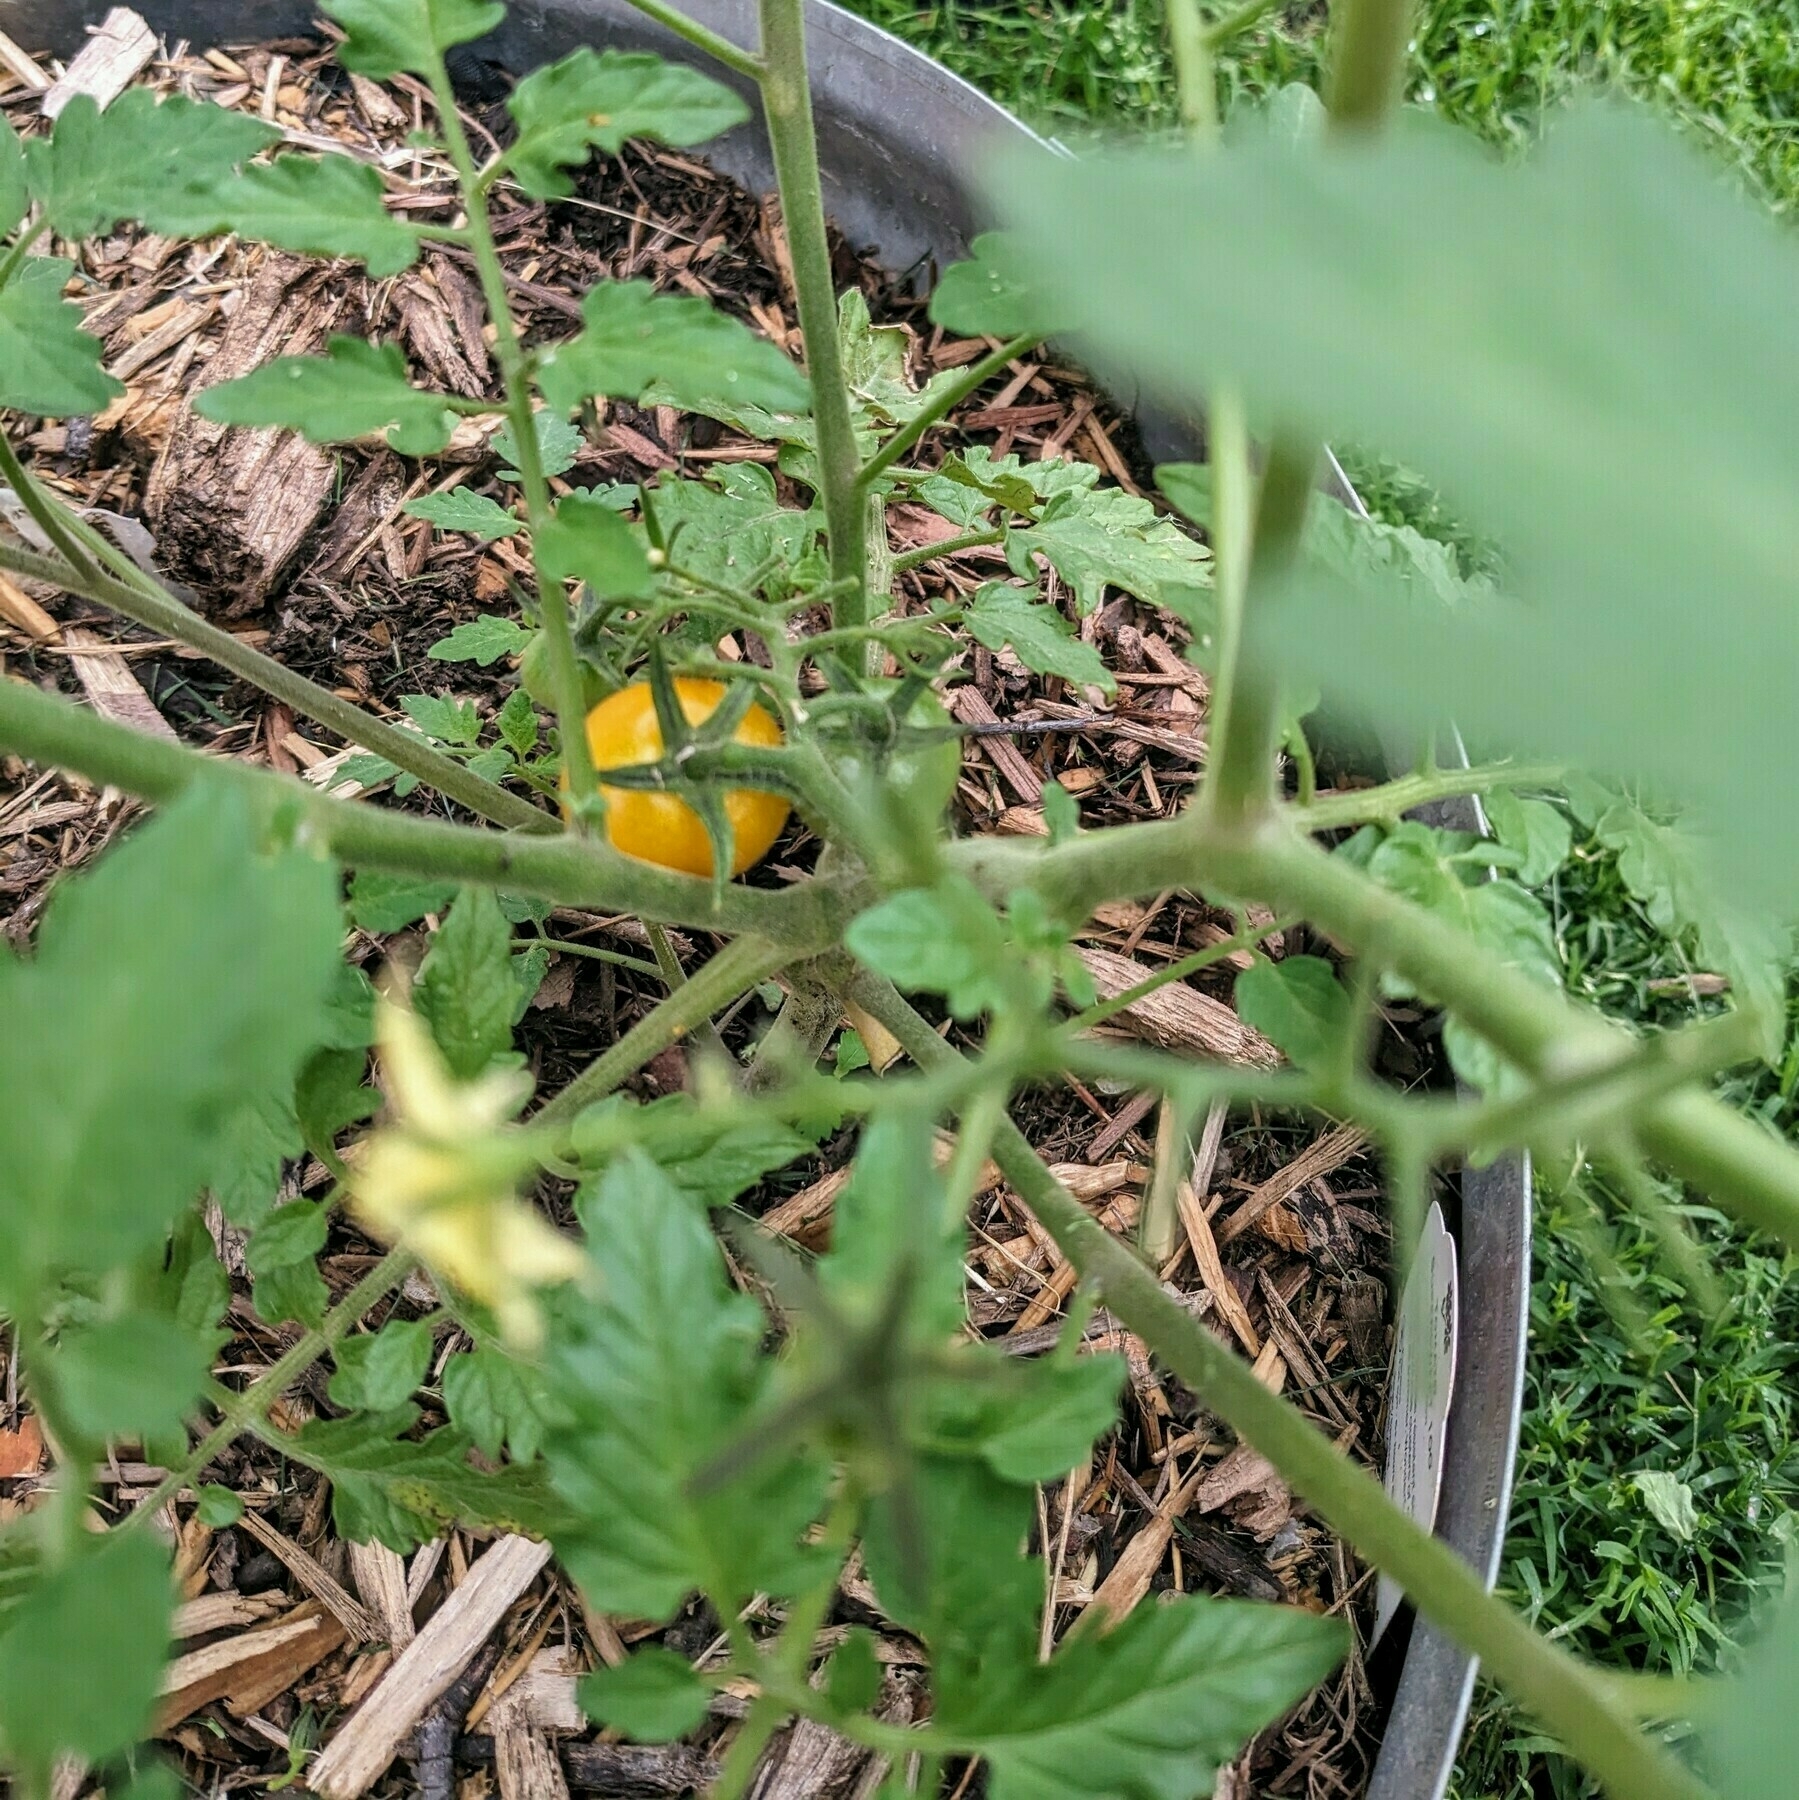 First yellow-orange cherry tomato ripening on the vine.